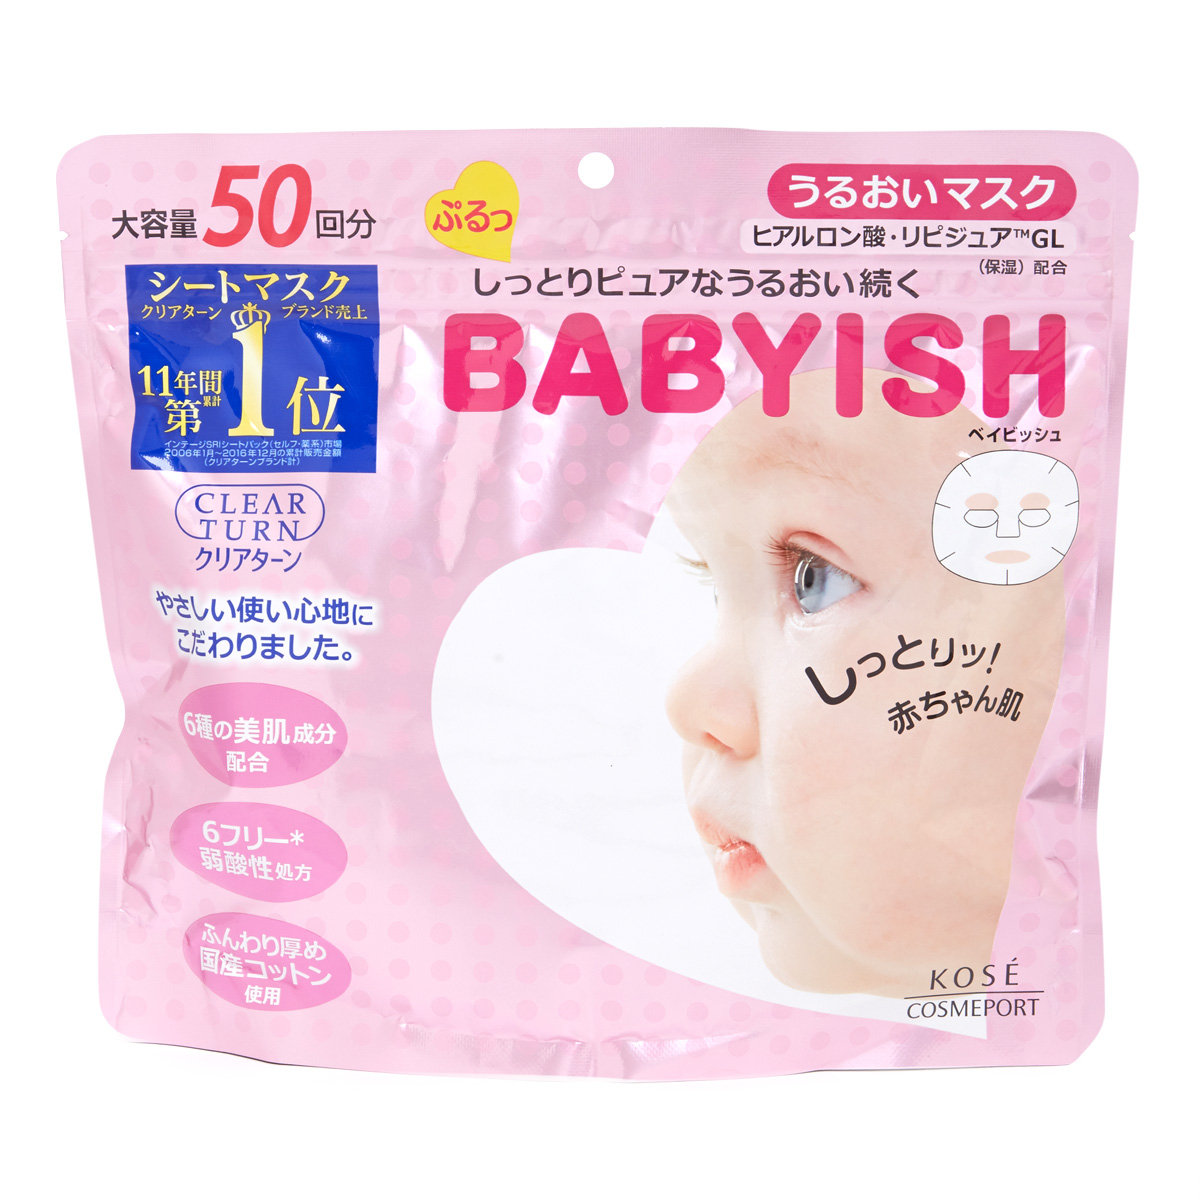 Kose Clear Turn Babyish Mask (pink)